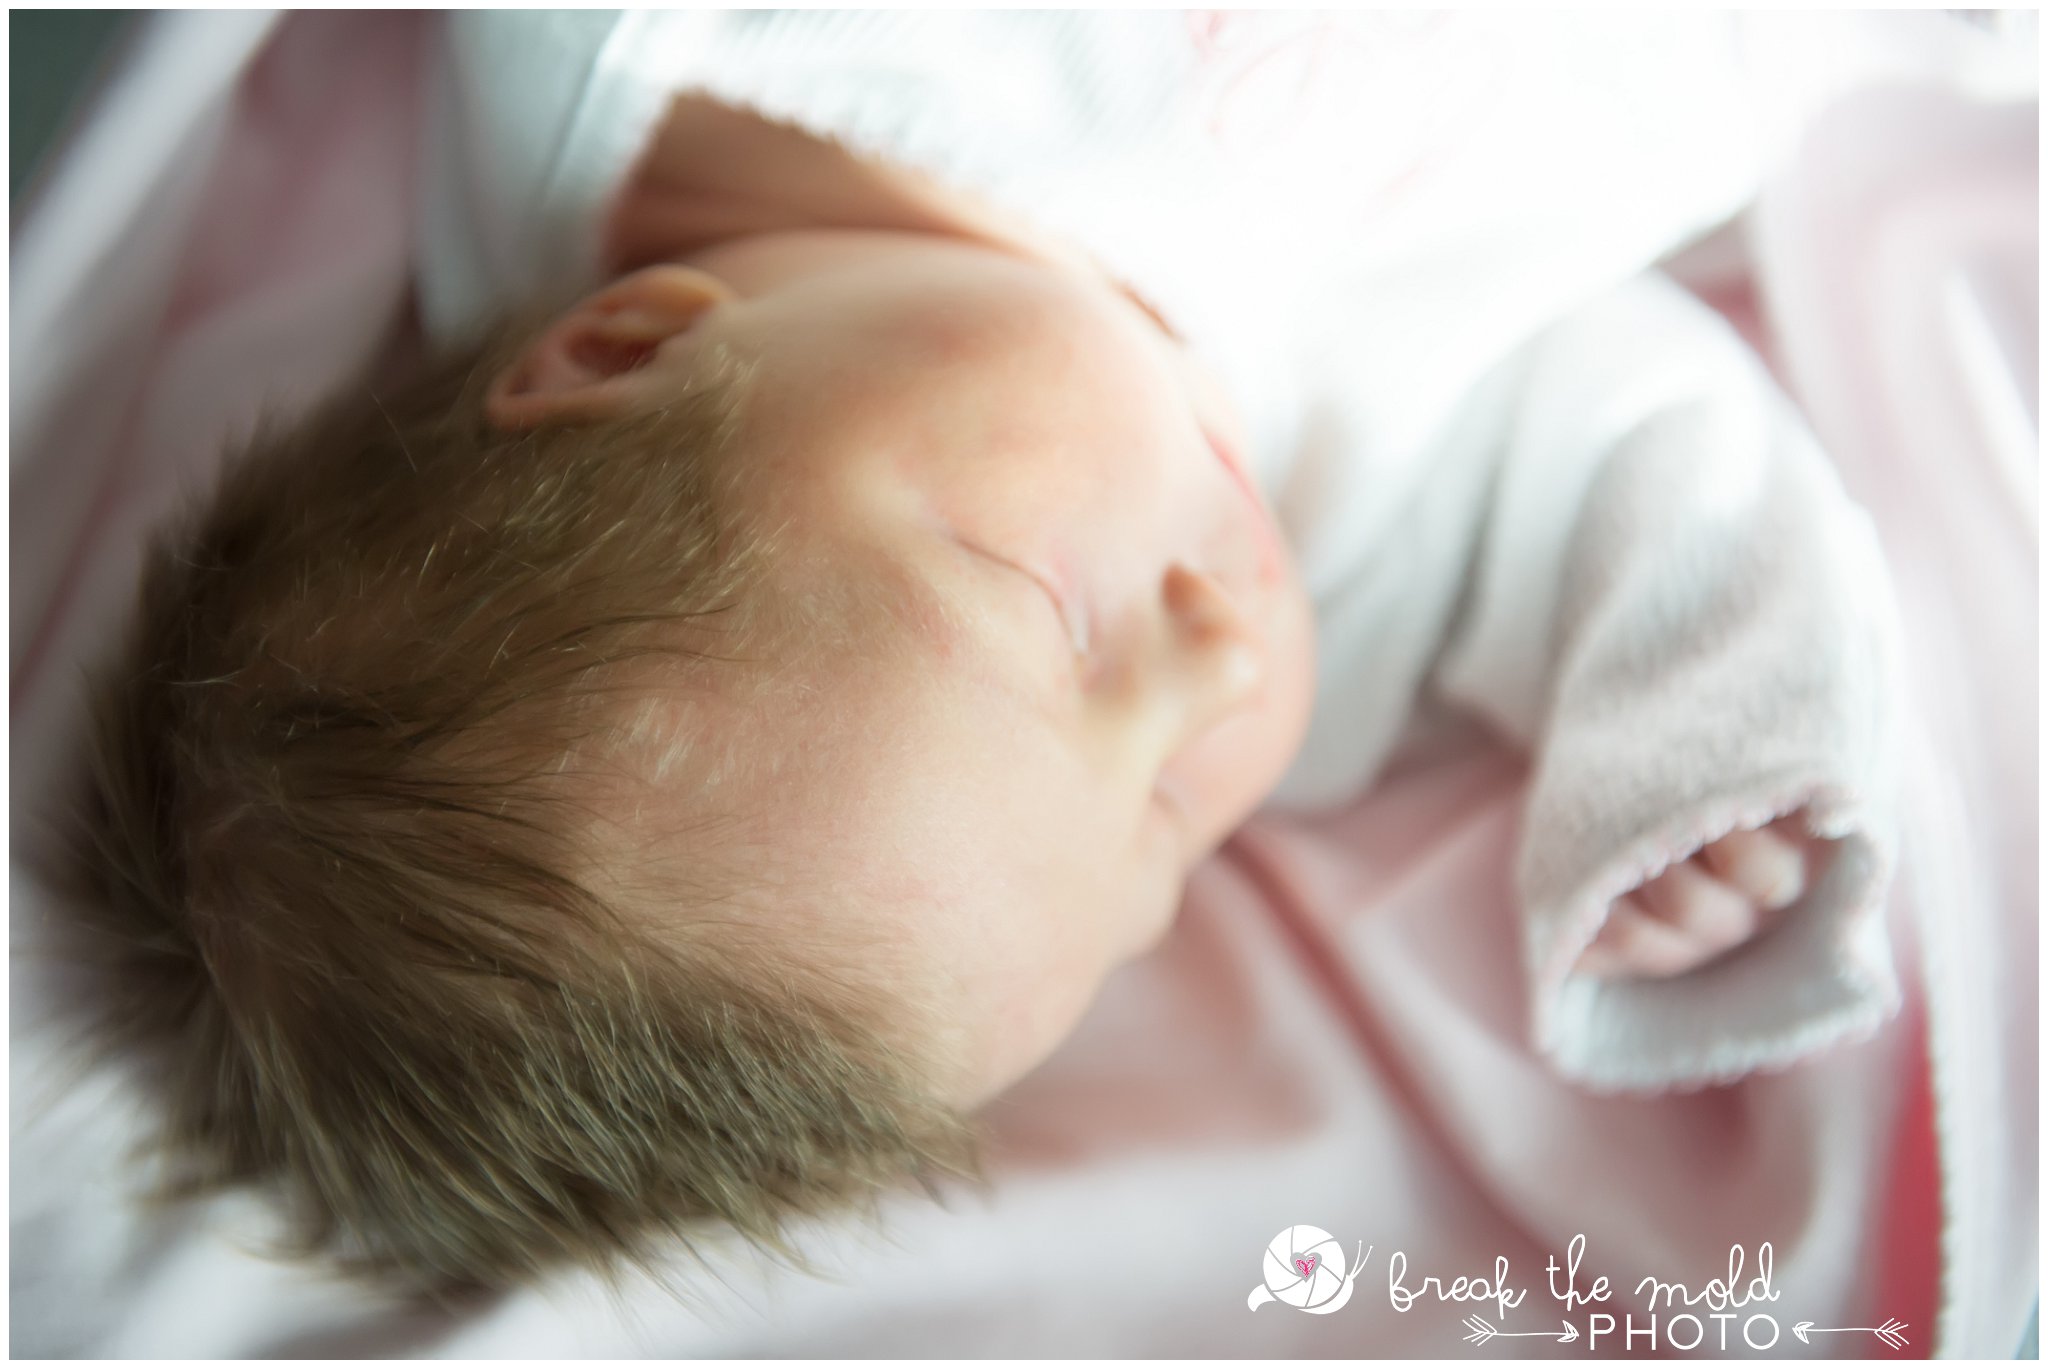 fresh-24-newborn-in-hospital-break-the-mold-photo-baby-girl-sweet-in-room-photos (25).jpg